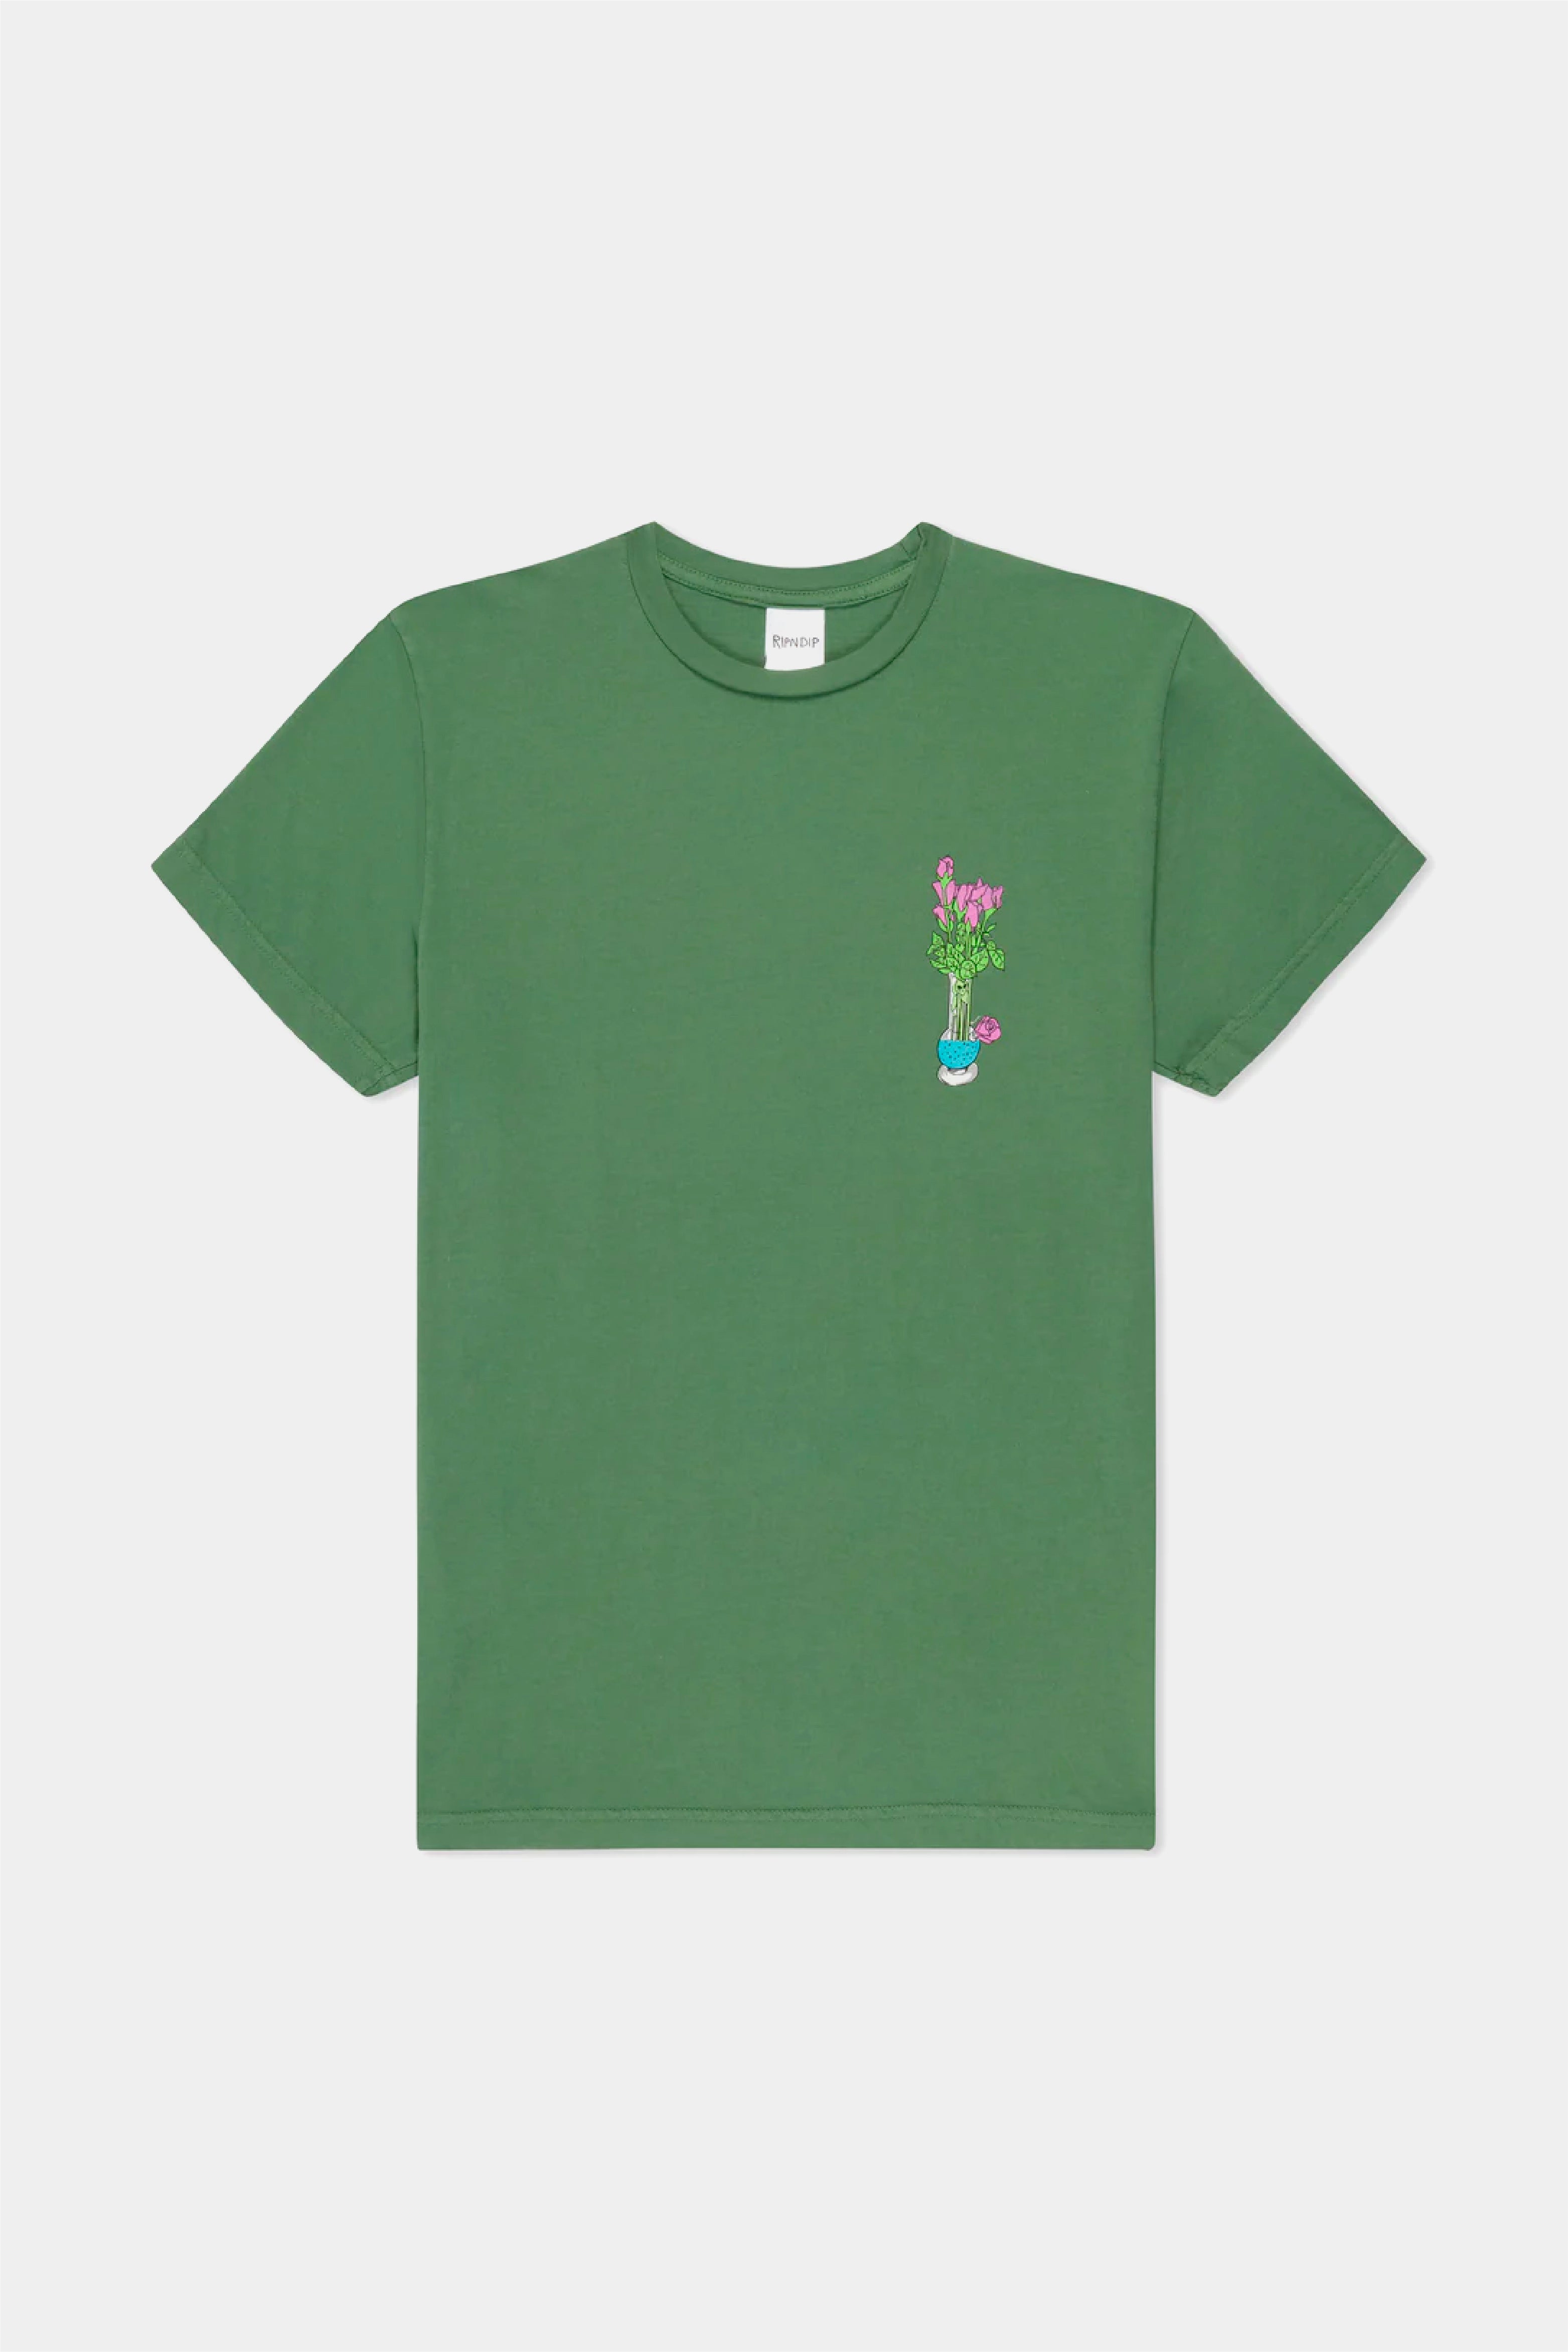 Selectshop FRAME - RIPNDIP Flower Vase Tee T-Shirts Concept Store Dubai